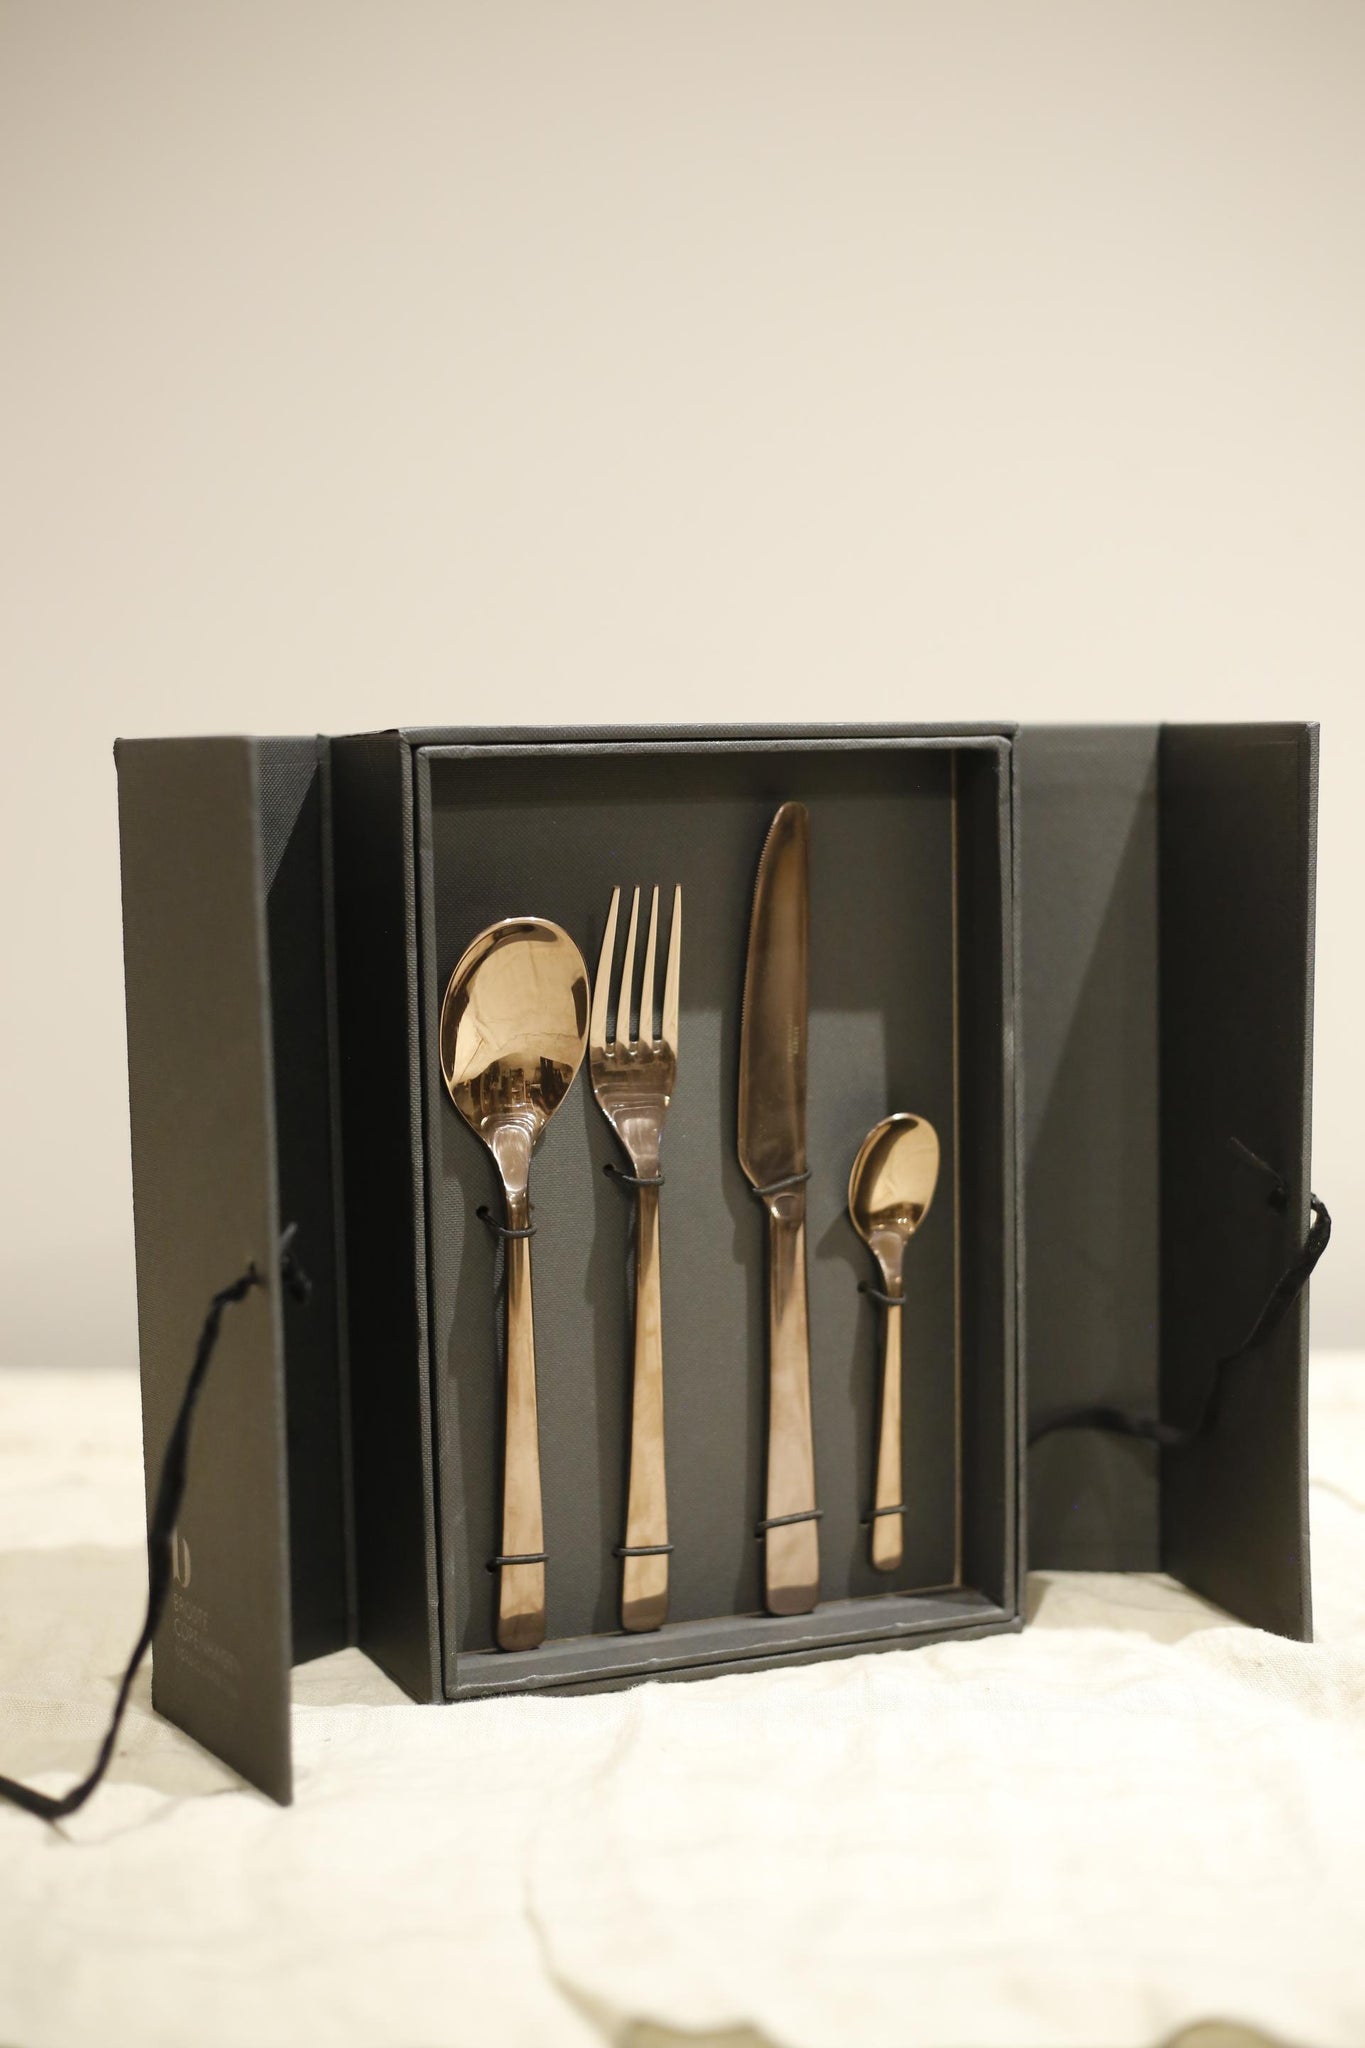 Danish 'Hune' Cutlery set- 16 pieces per set